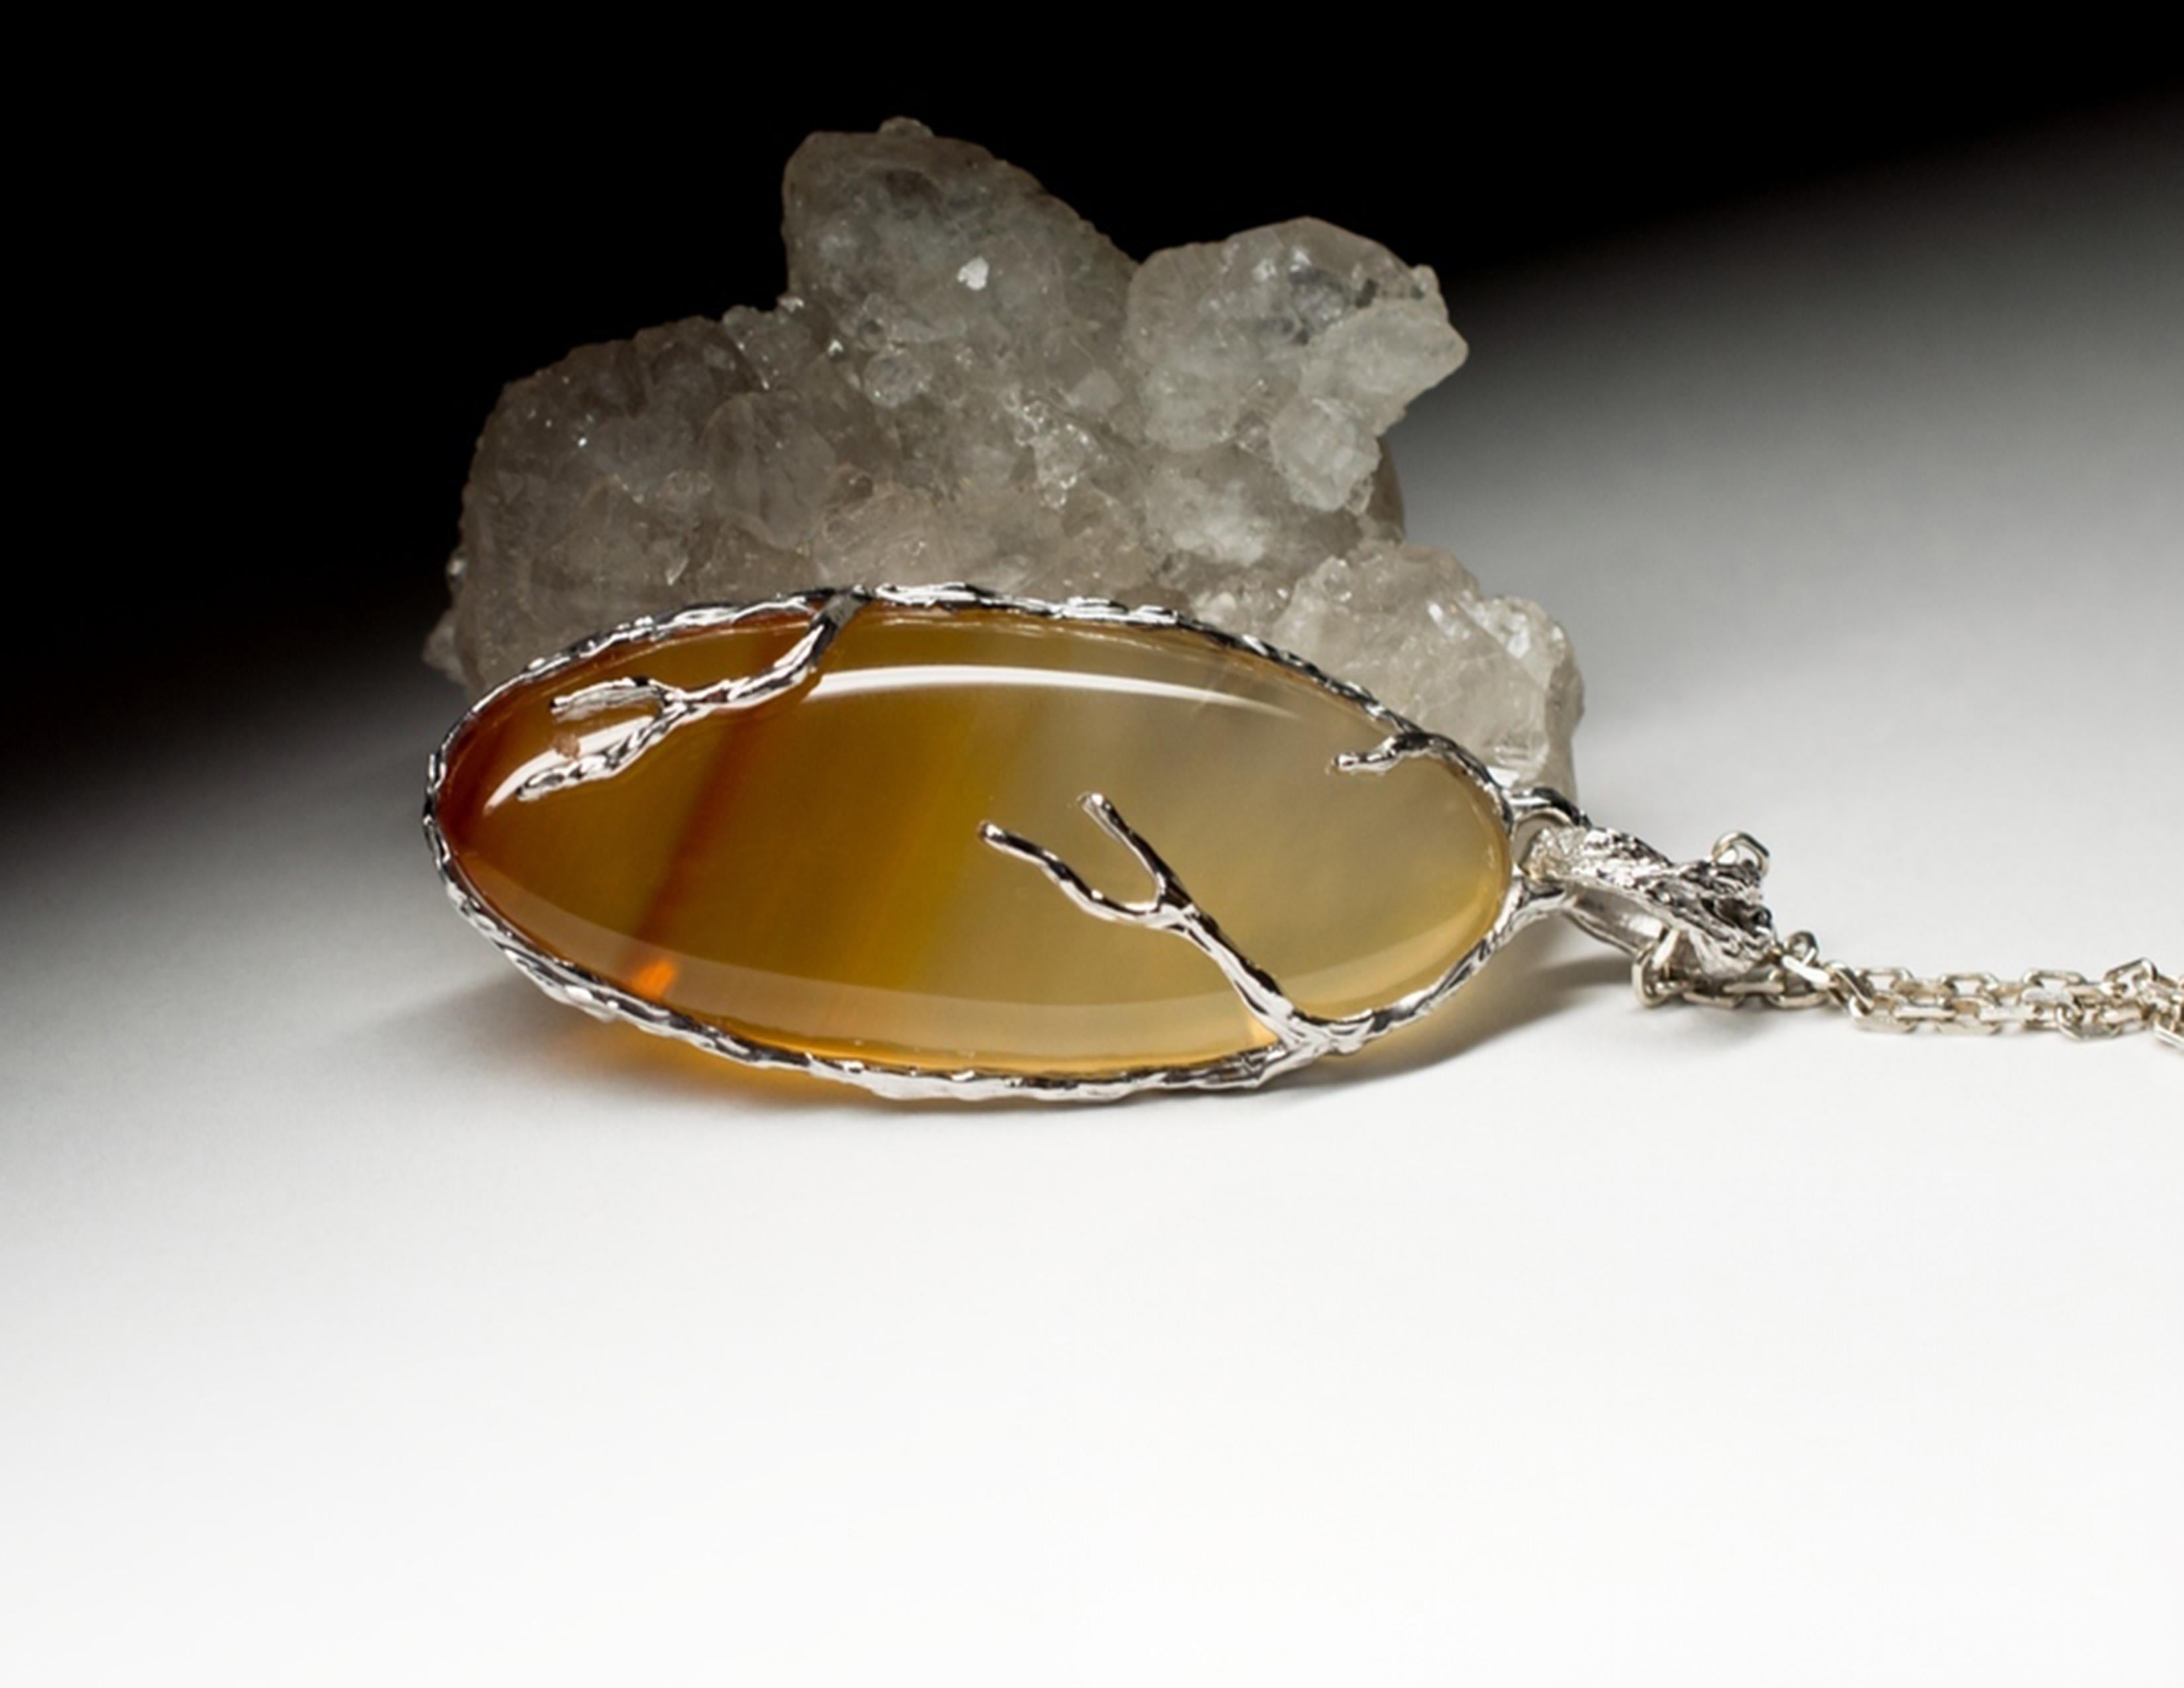 Silver pendant with natural Carnelian
pendant weight - 6.28 grams
stone measurements - 0.2 х 0.63 х 1.46 in / 5 х 16 х 37 mm
pendant weight - 6.28 grams
pendant height - 1.85 in / 47 mm